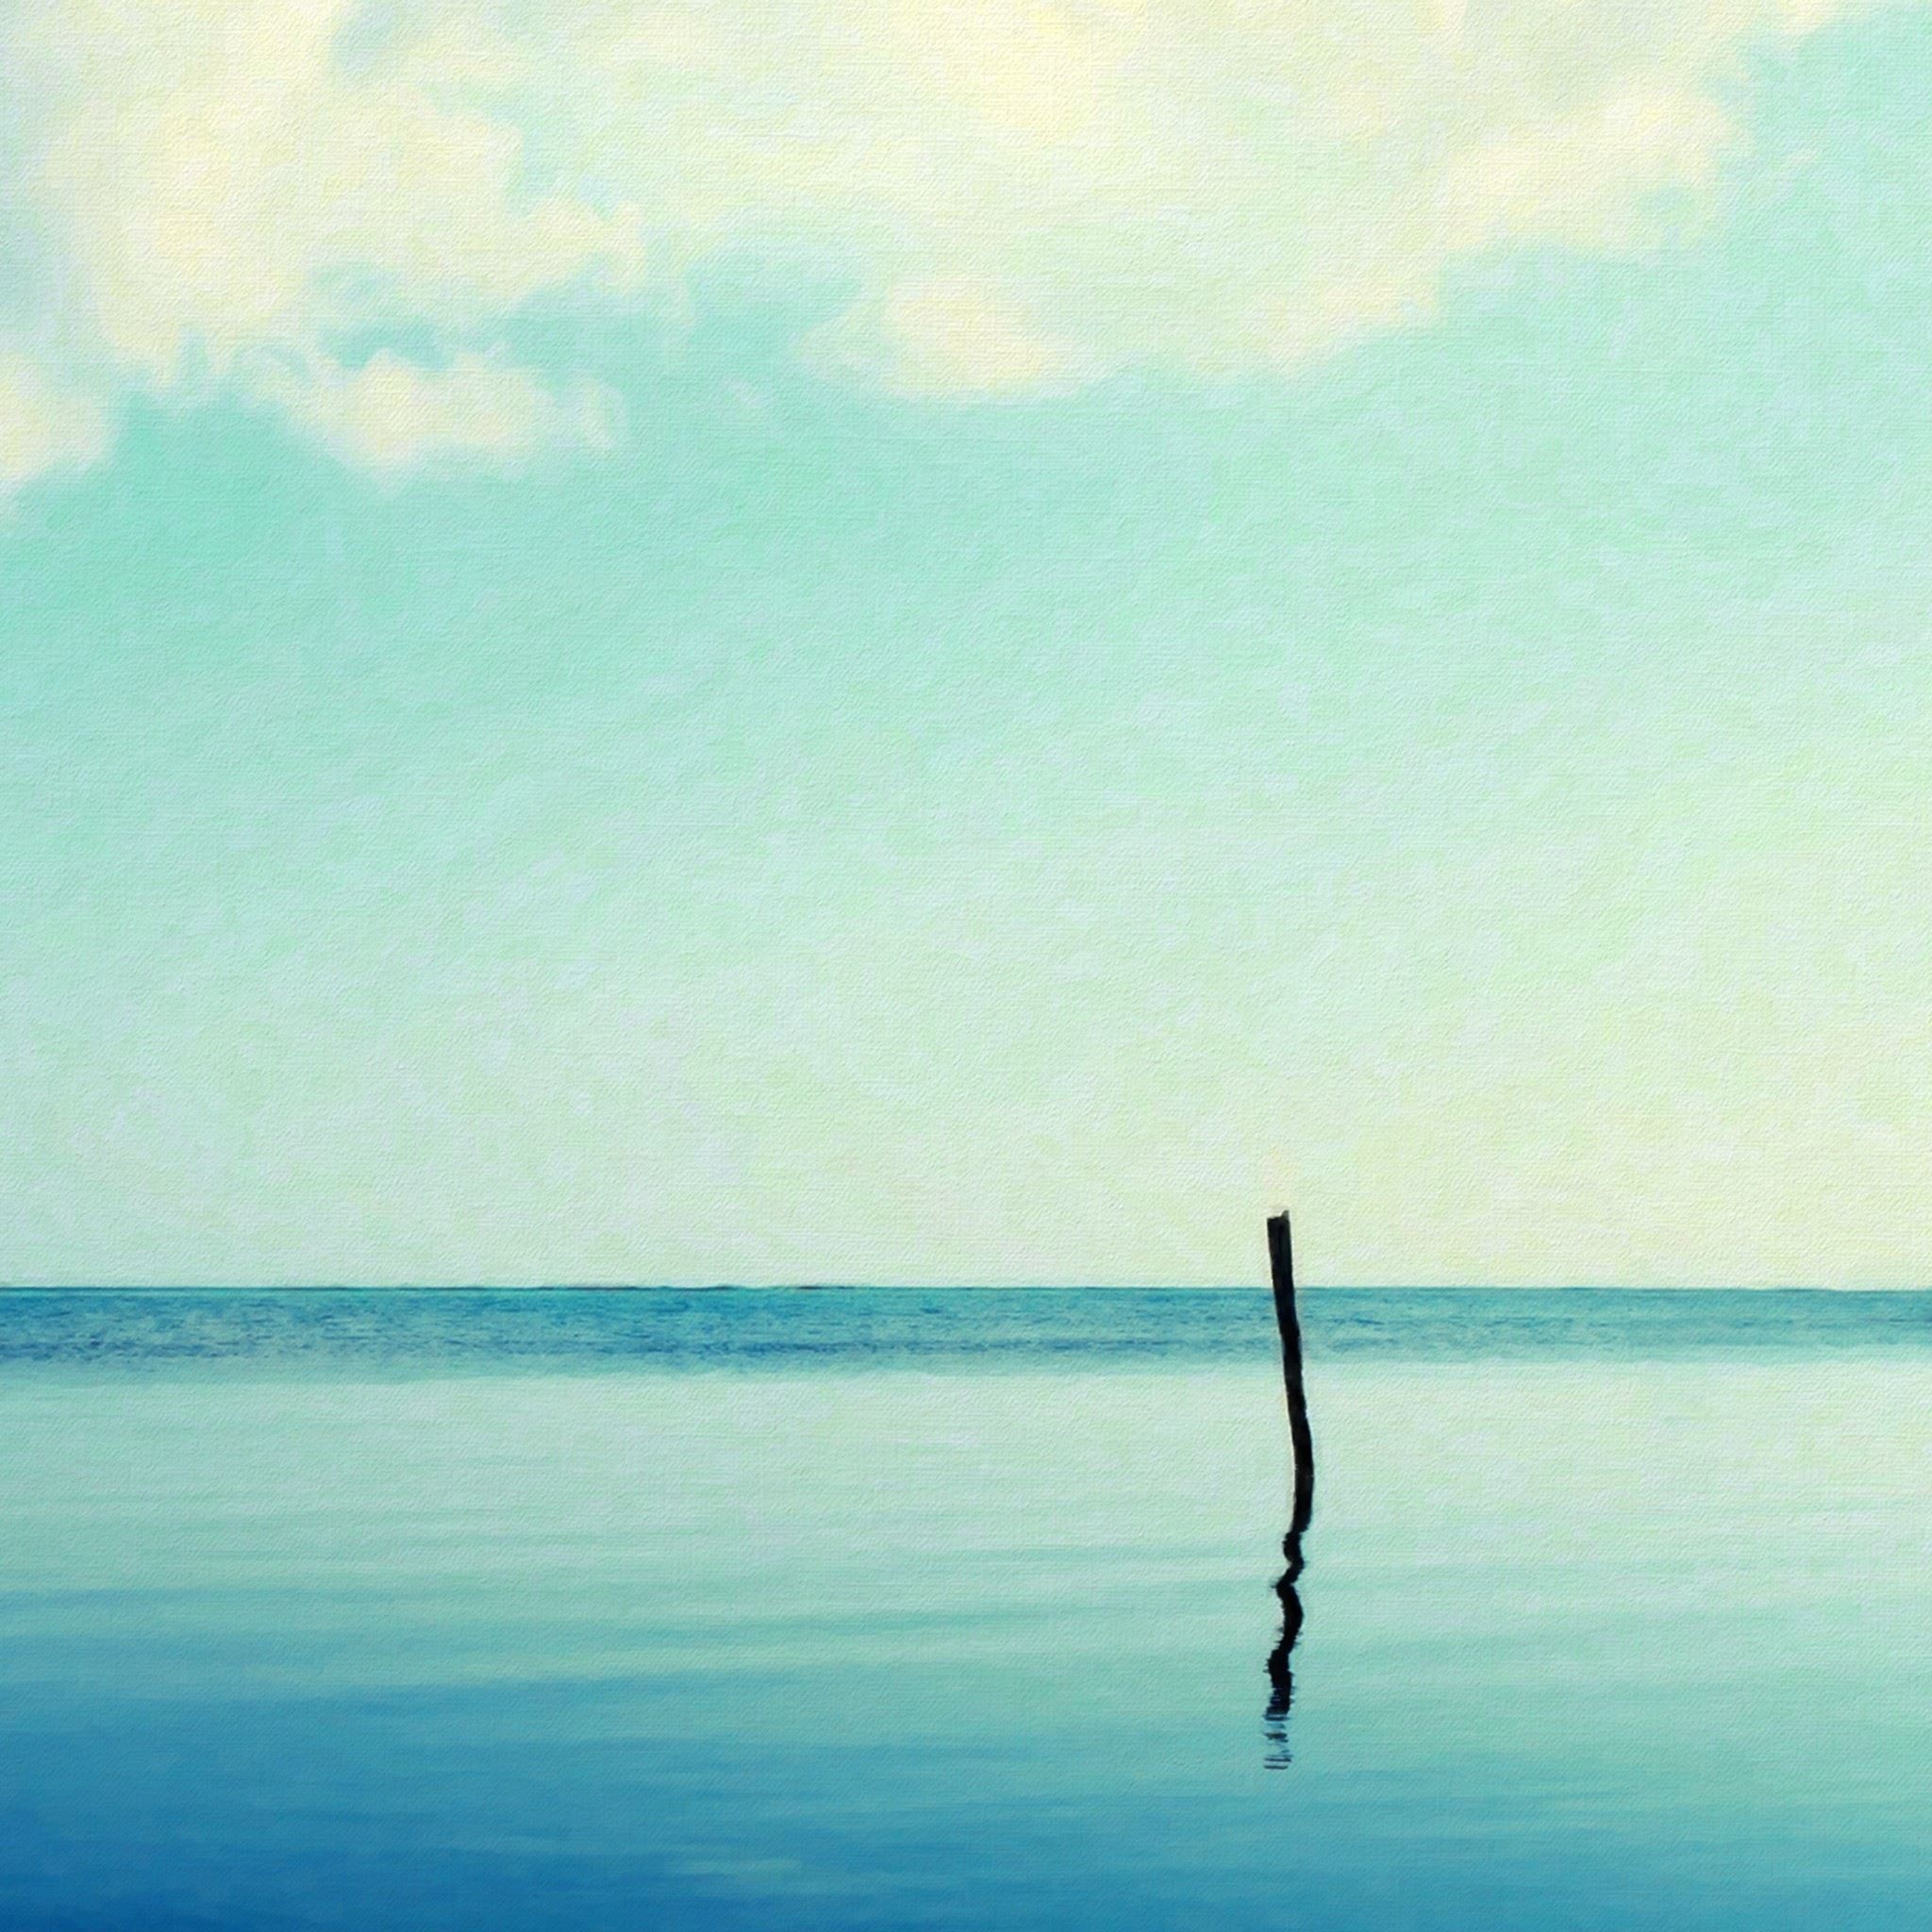 Nature Calm Peaceful Ocean Sea Skyline Scenery iPad Air wallpaper 